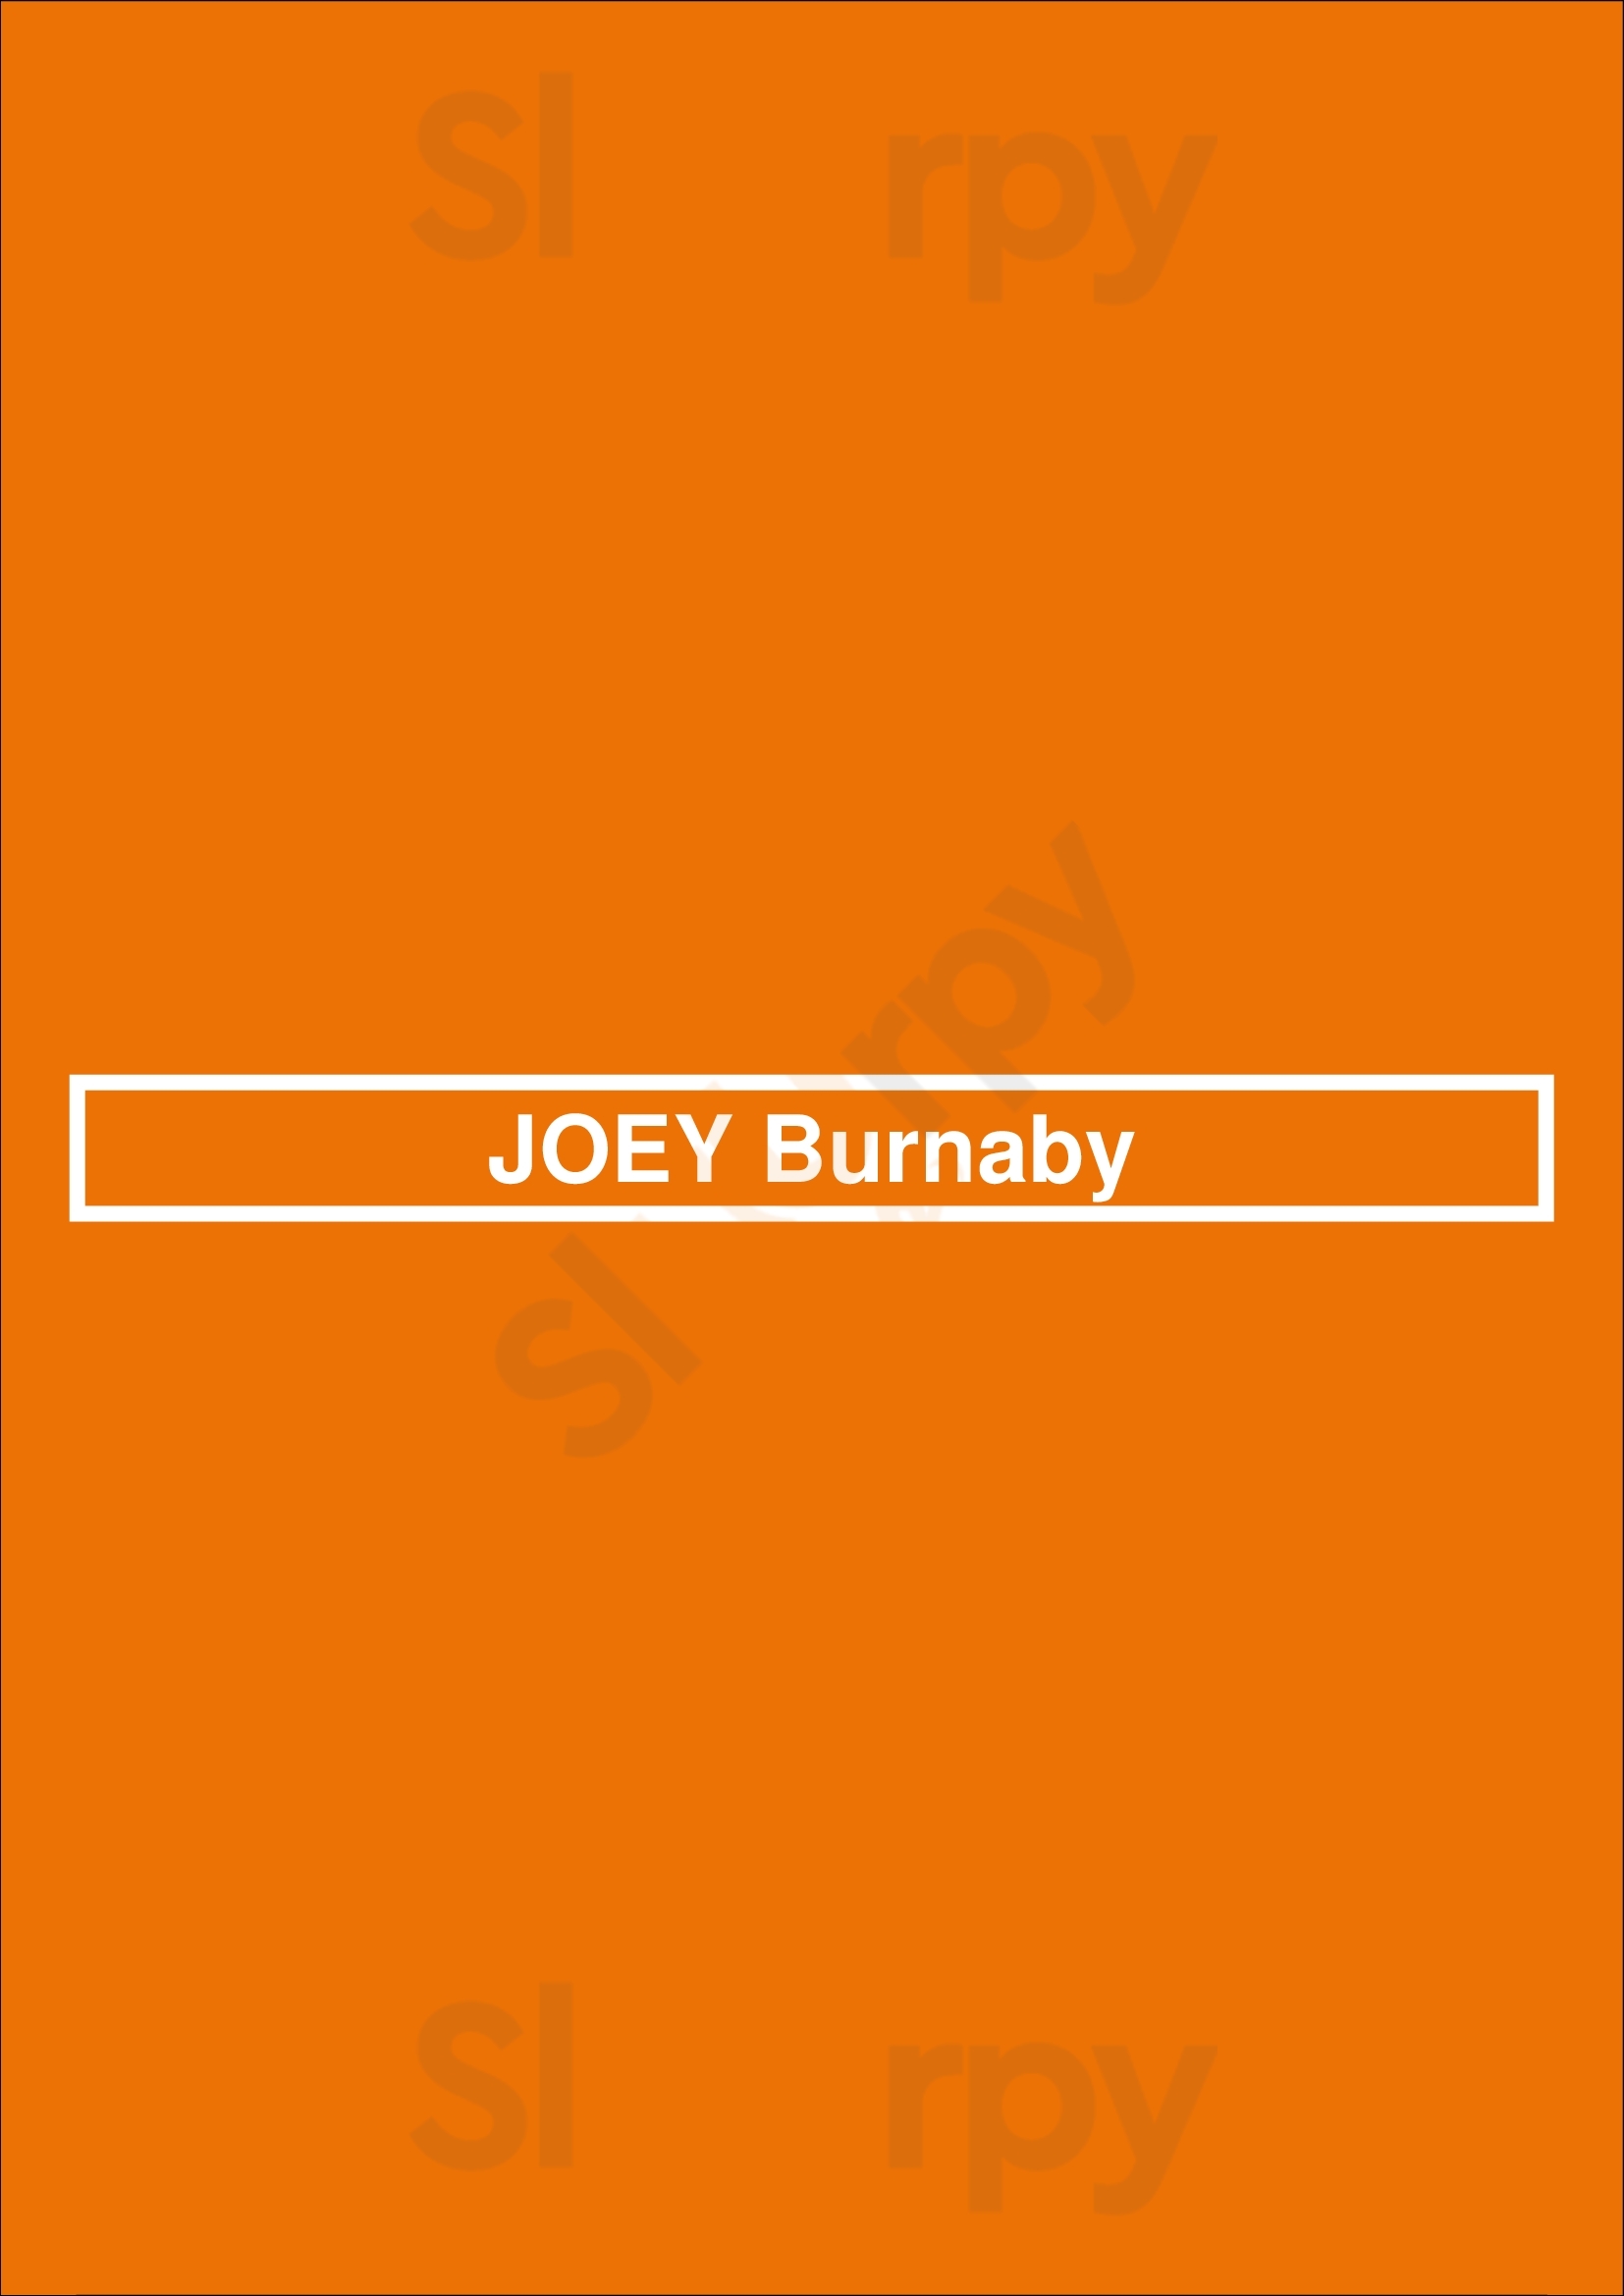 Joey Burnaby Burnaby Menu - 1